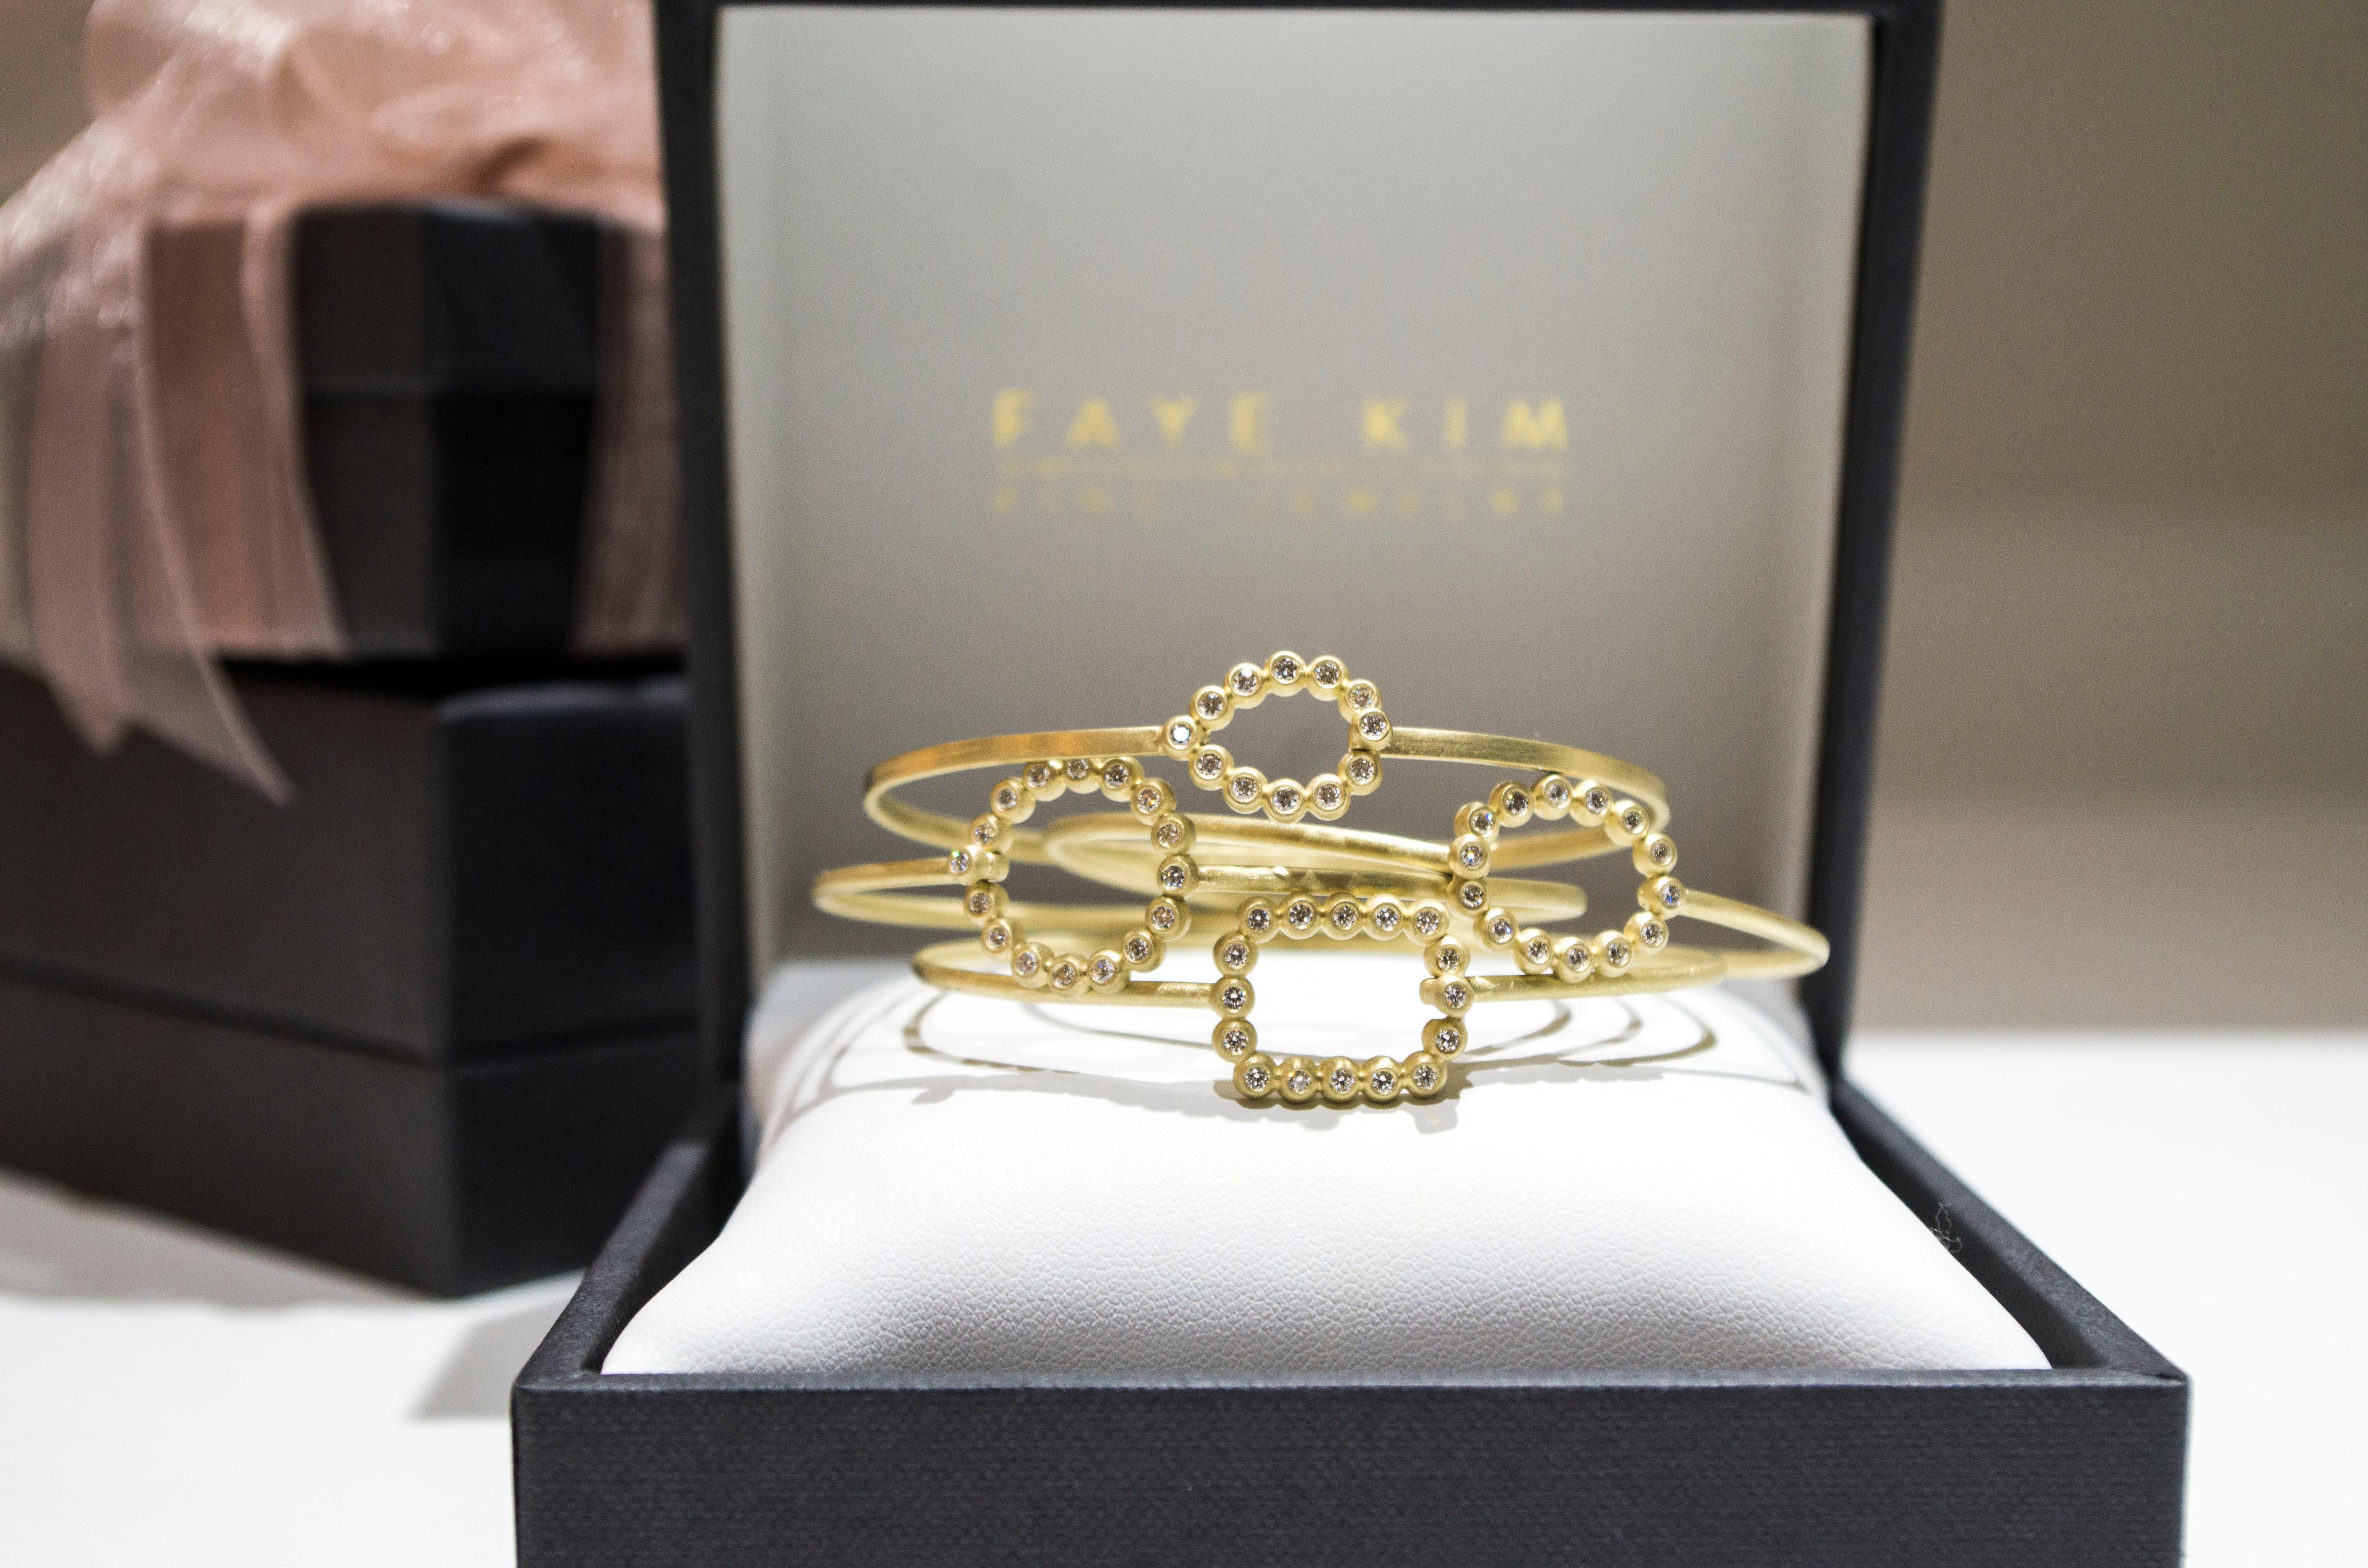 Faye Kim 18 Karat Gold Bangle with Oval Diamond Closure For Sale 2